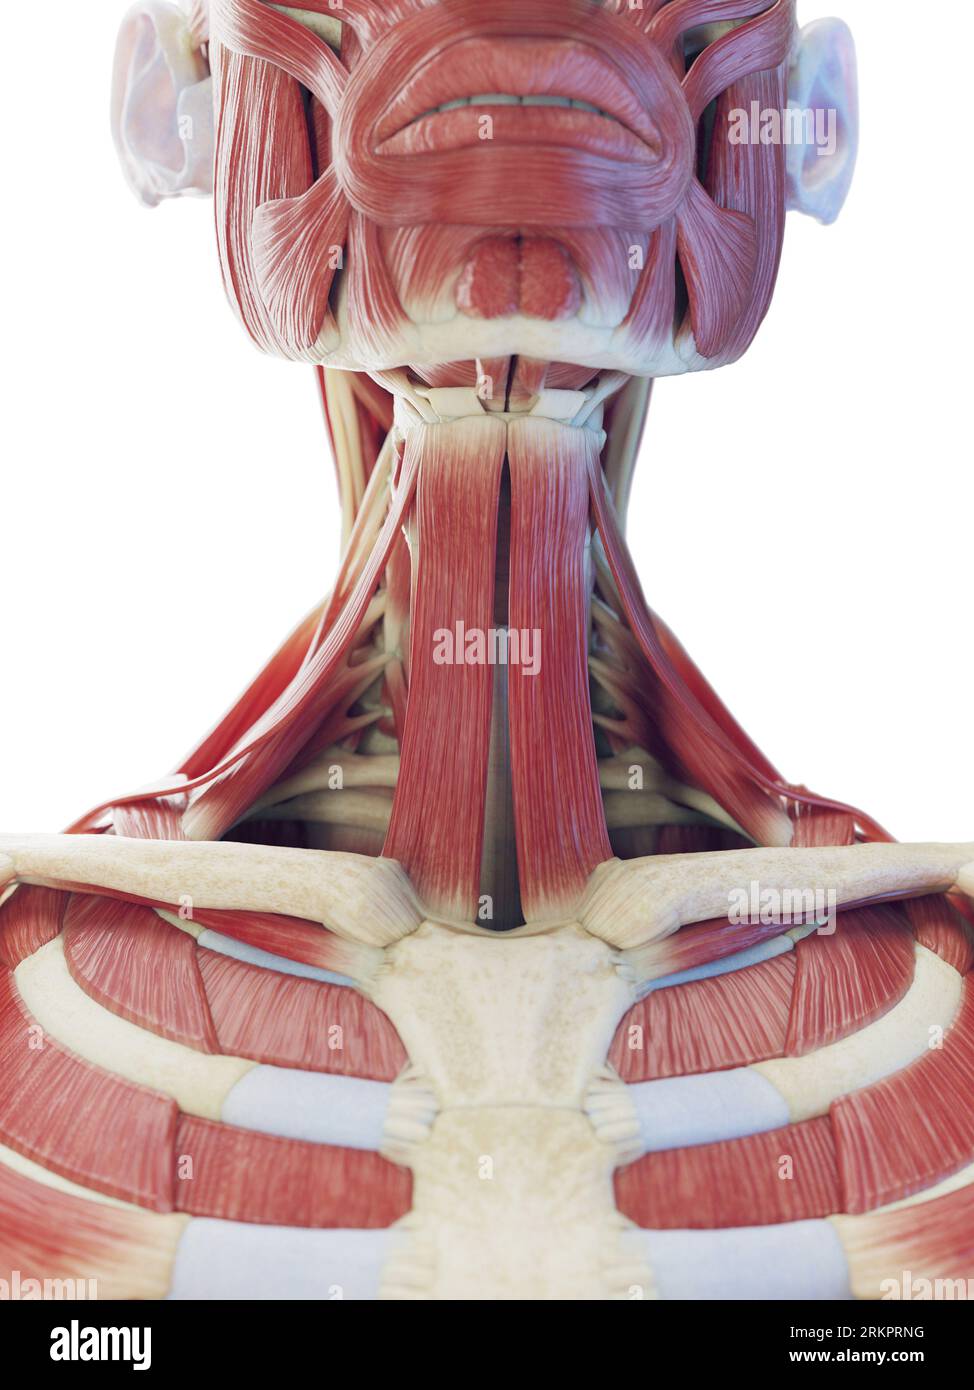 Neck muscles, illustration. Stock Photo